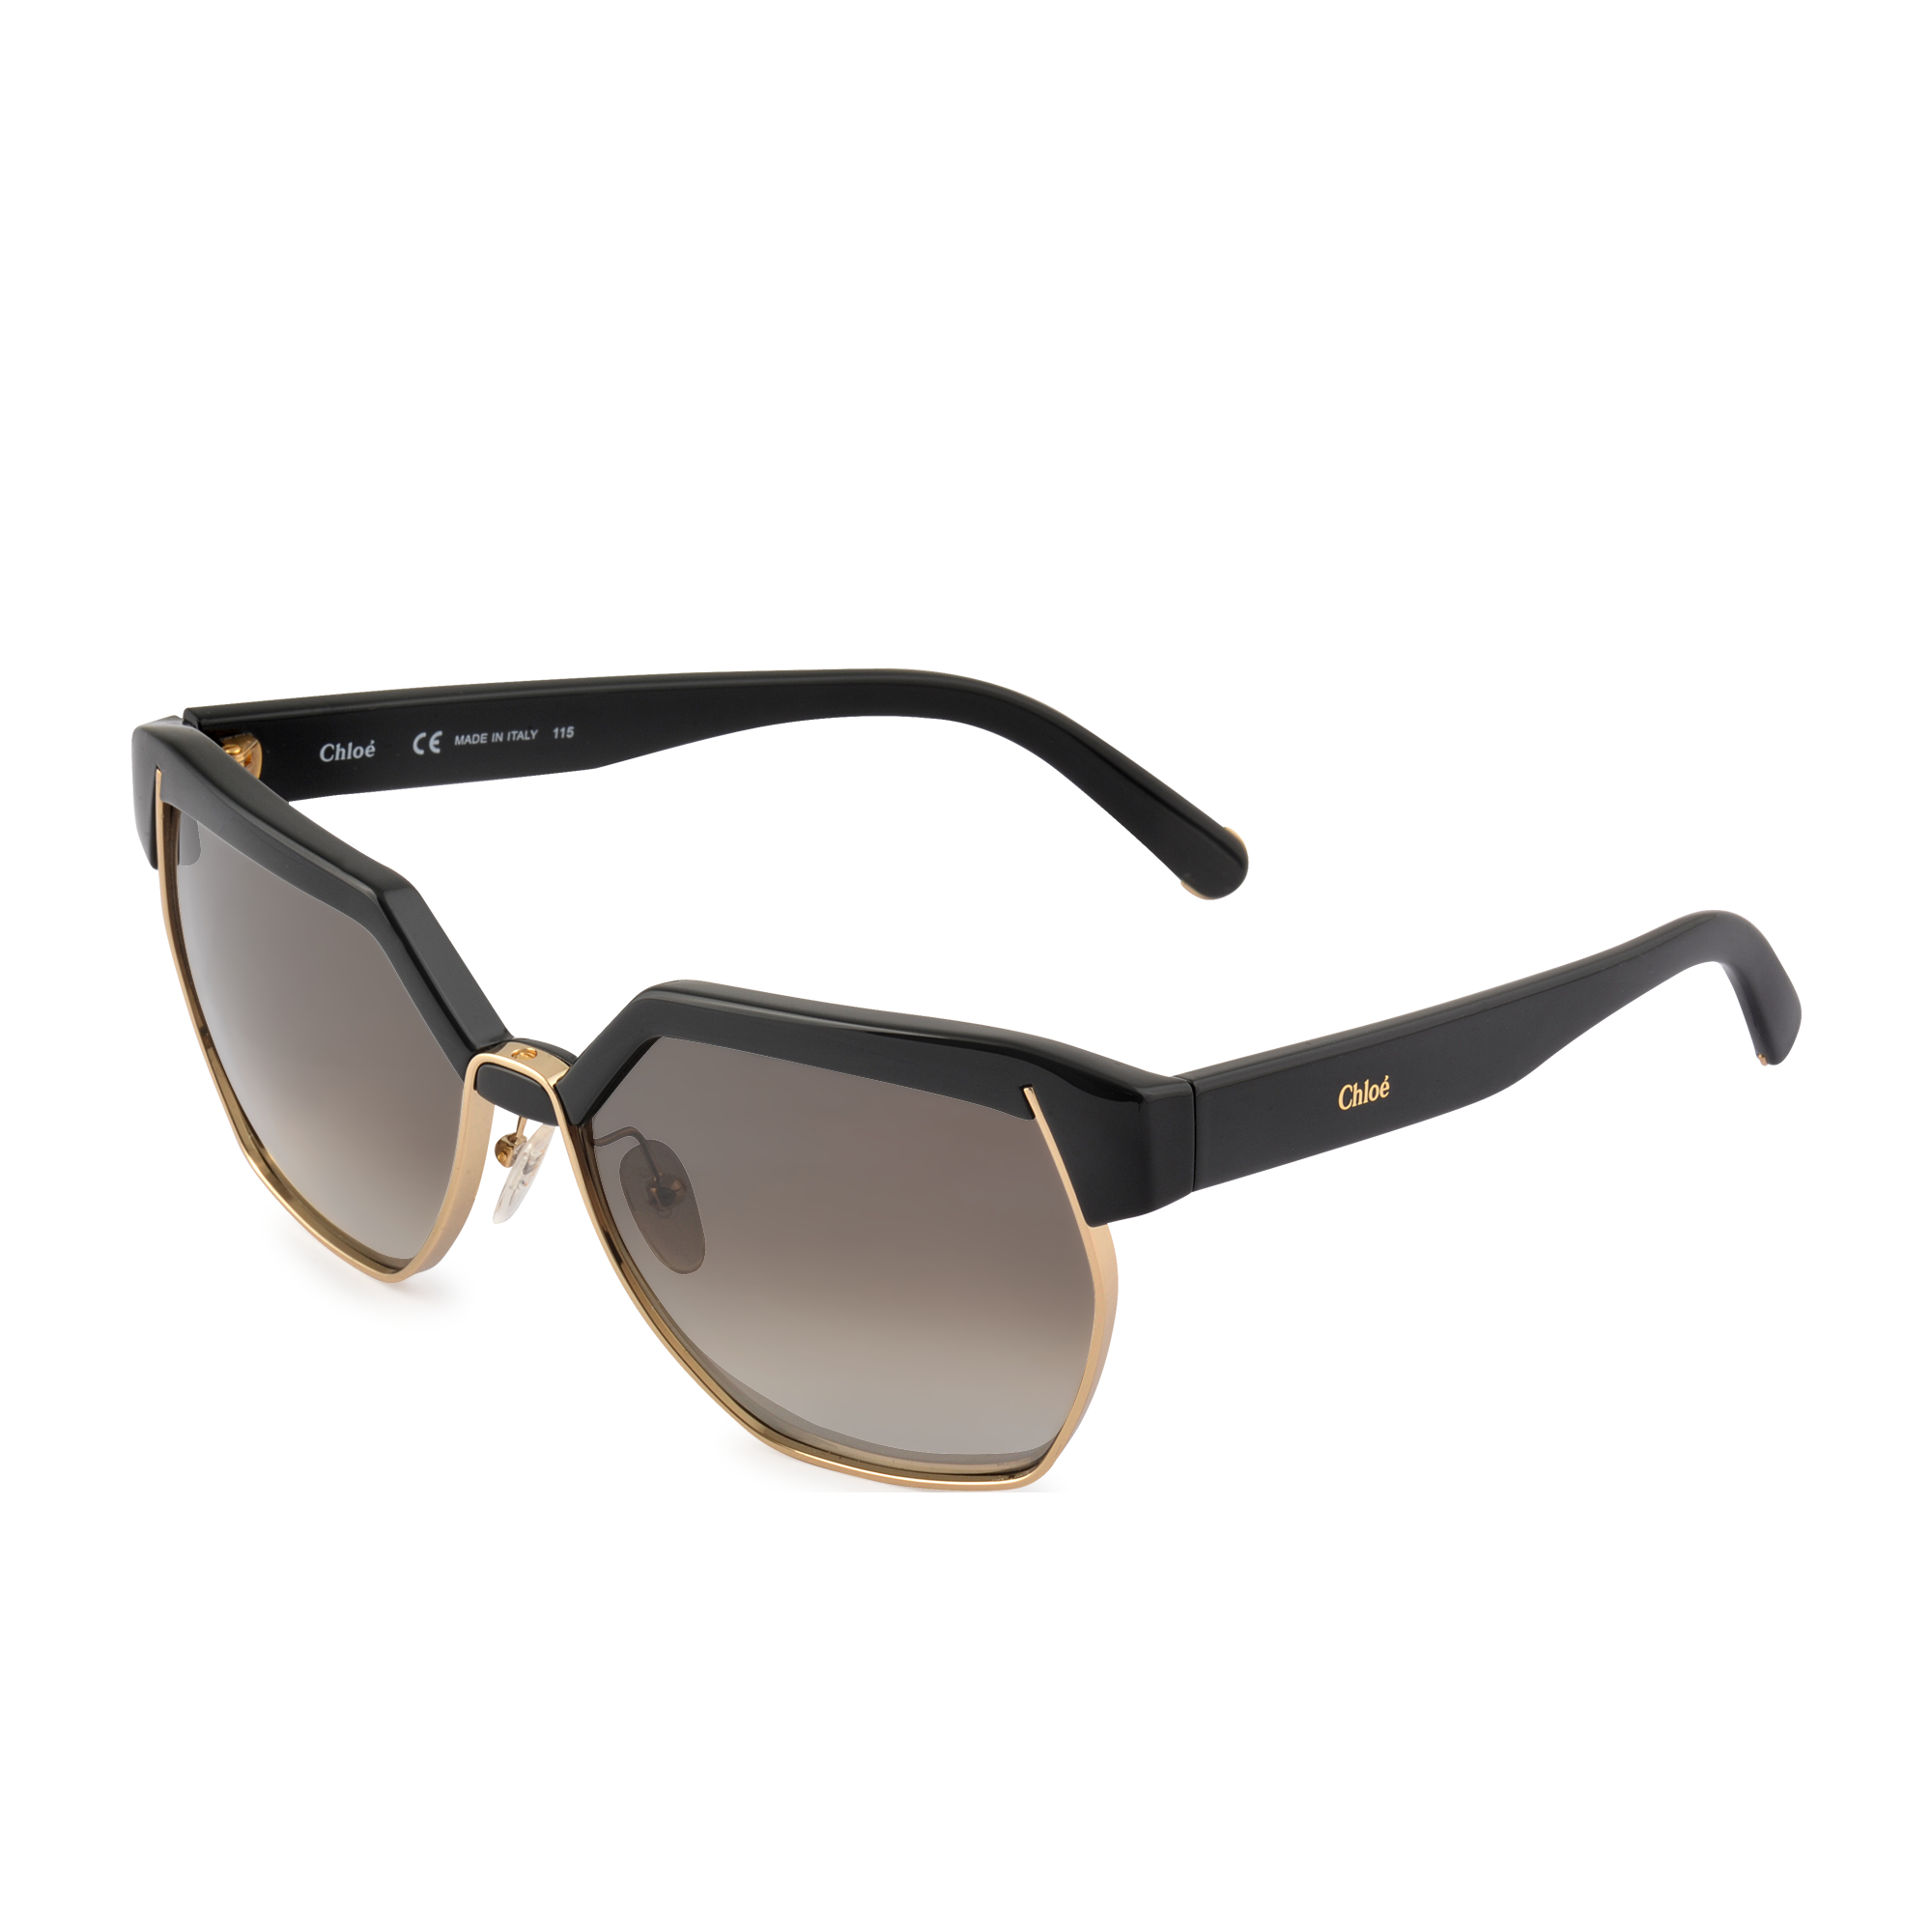 Chloé Ce665s Sunglasses in Black | Lyst